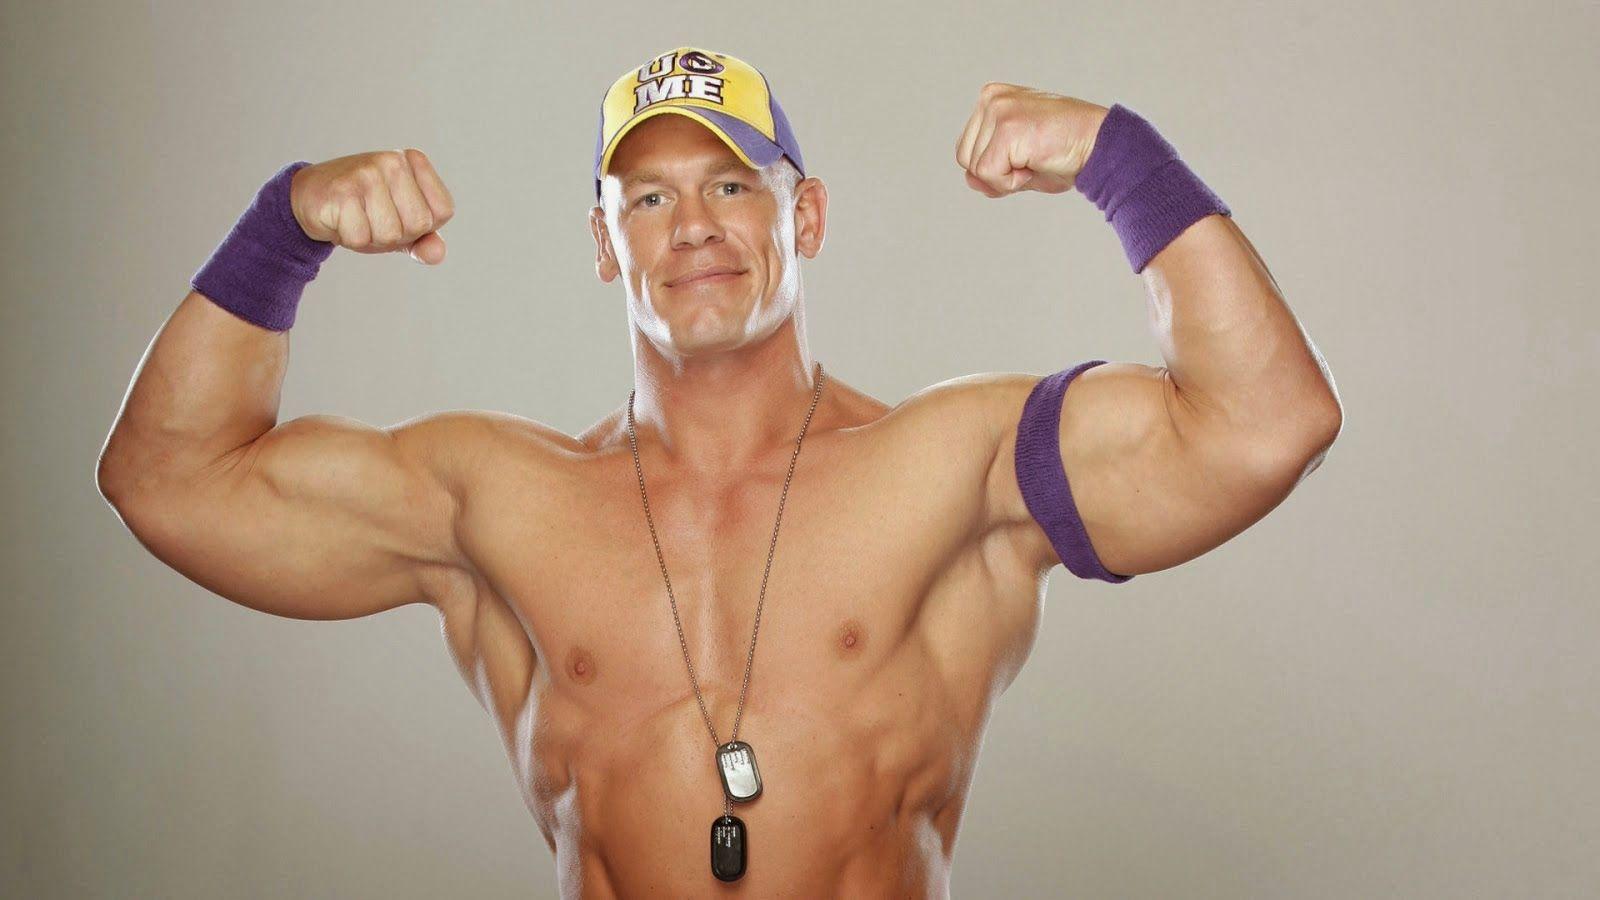 John Cena HD Wallpaper Wrestler. Download Free High